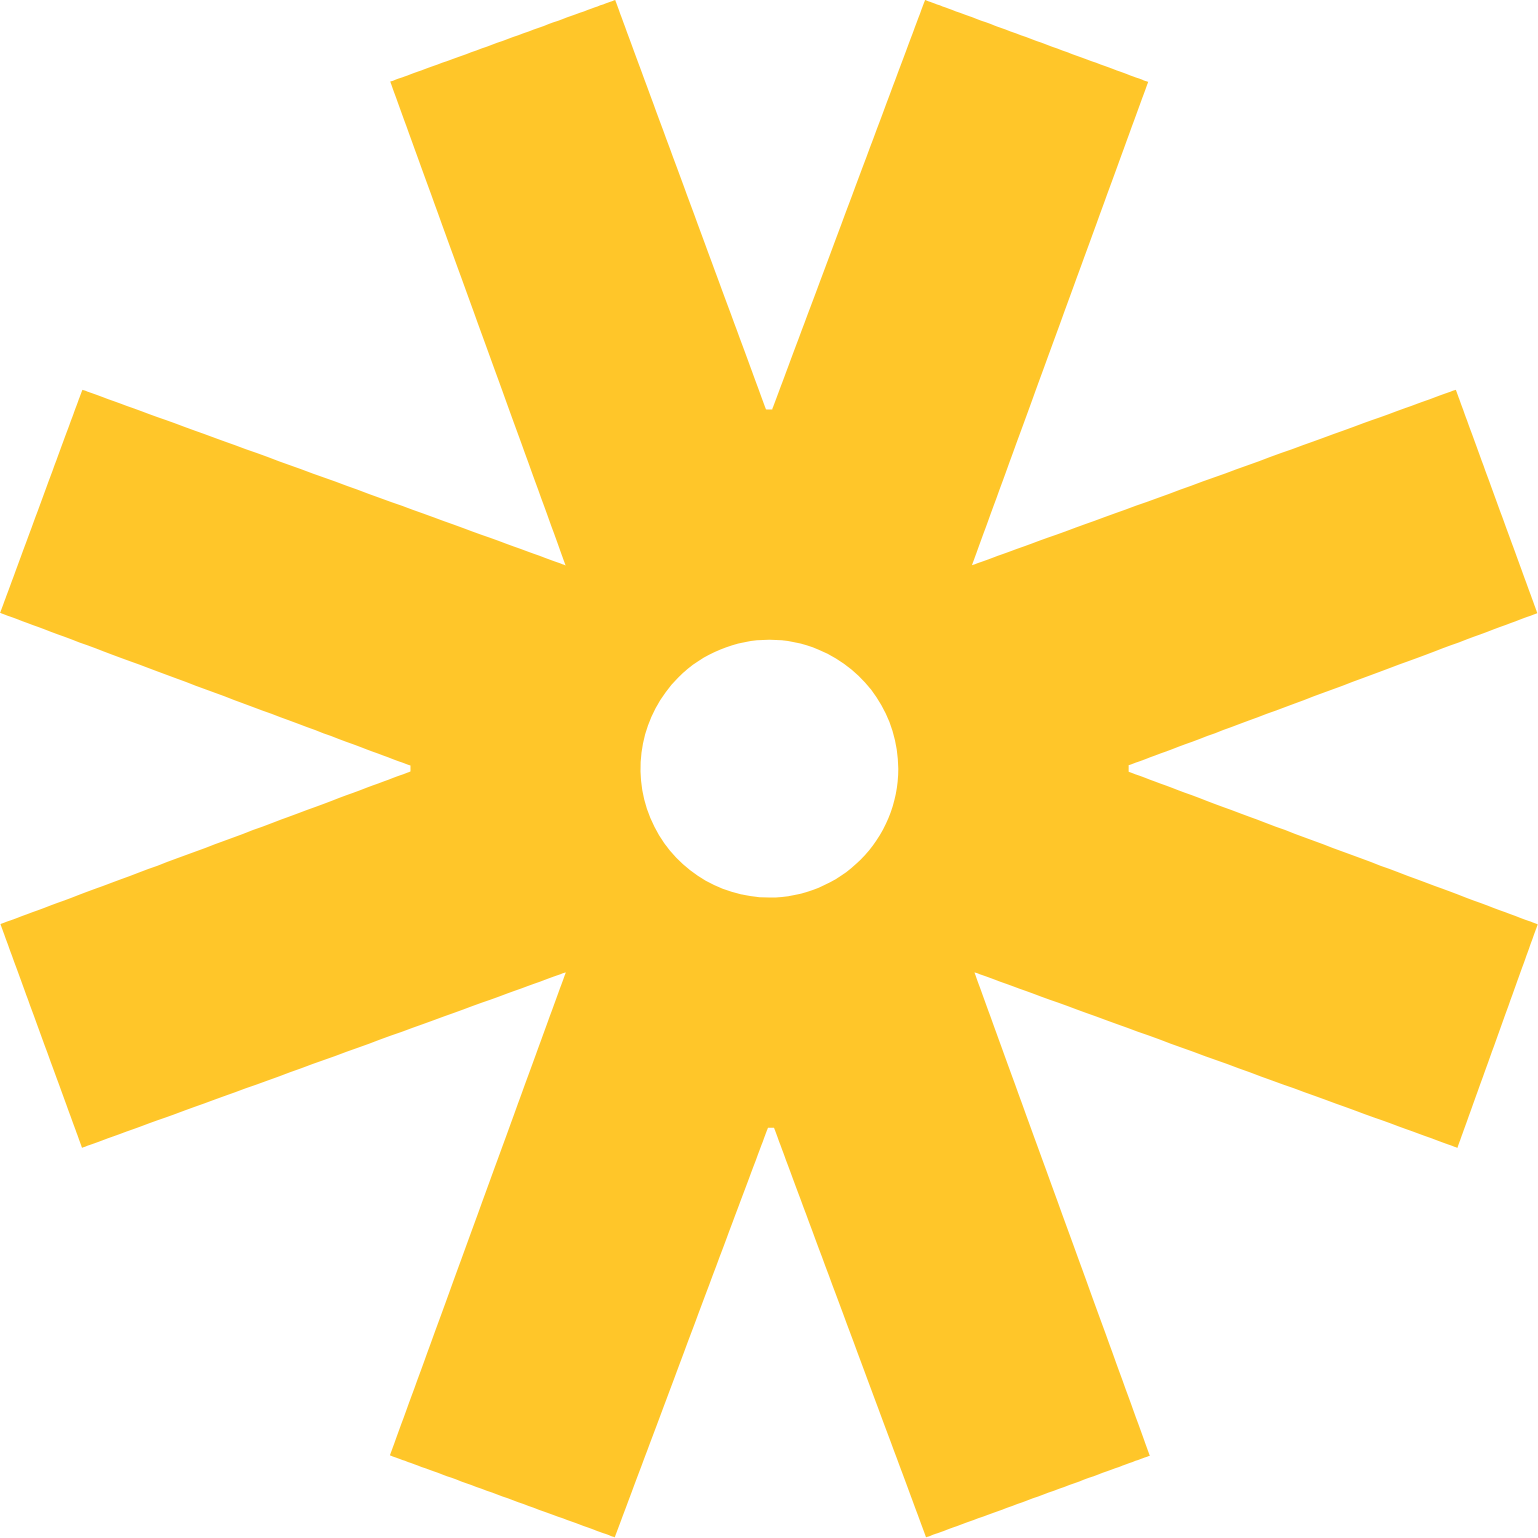 Vitru logo (PNG transparent)